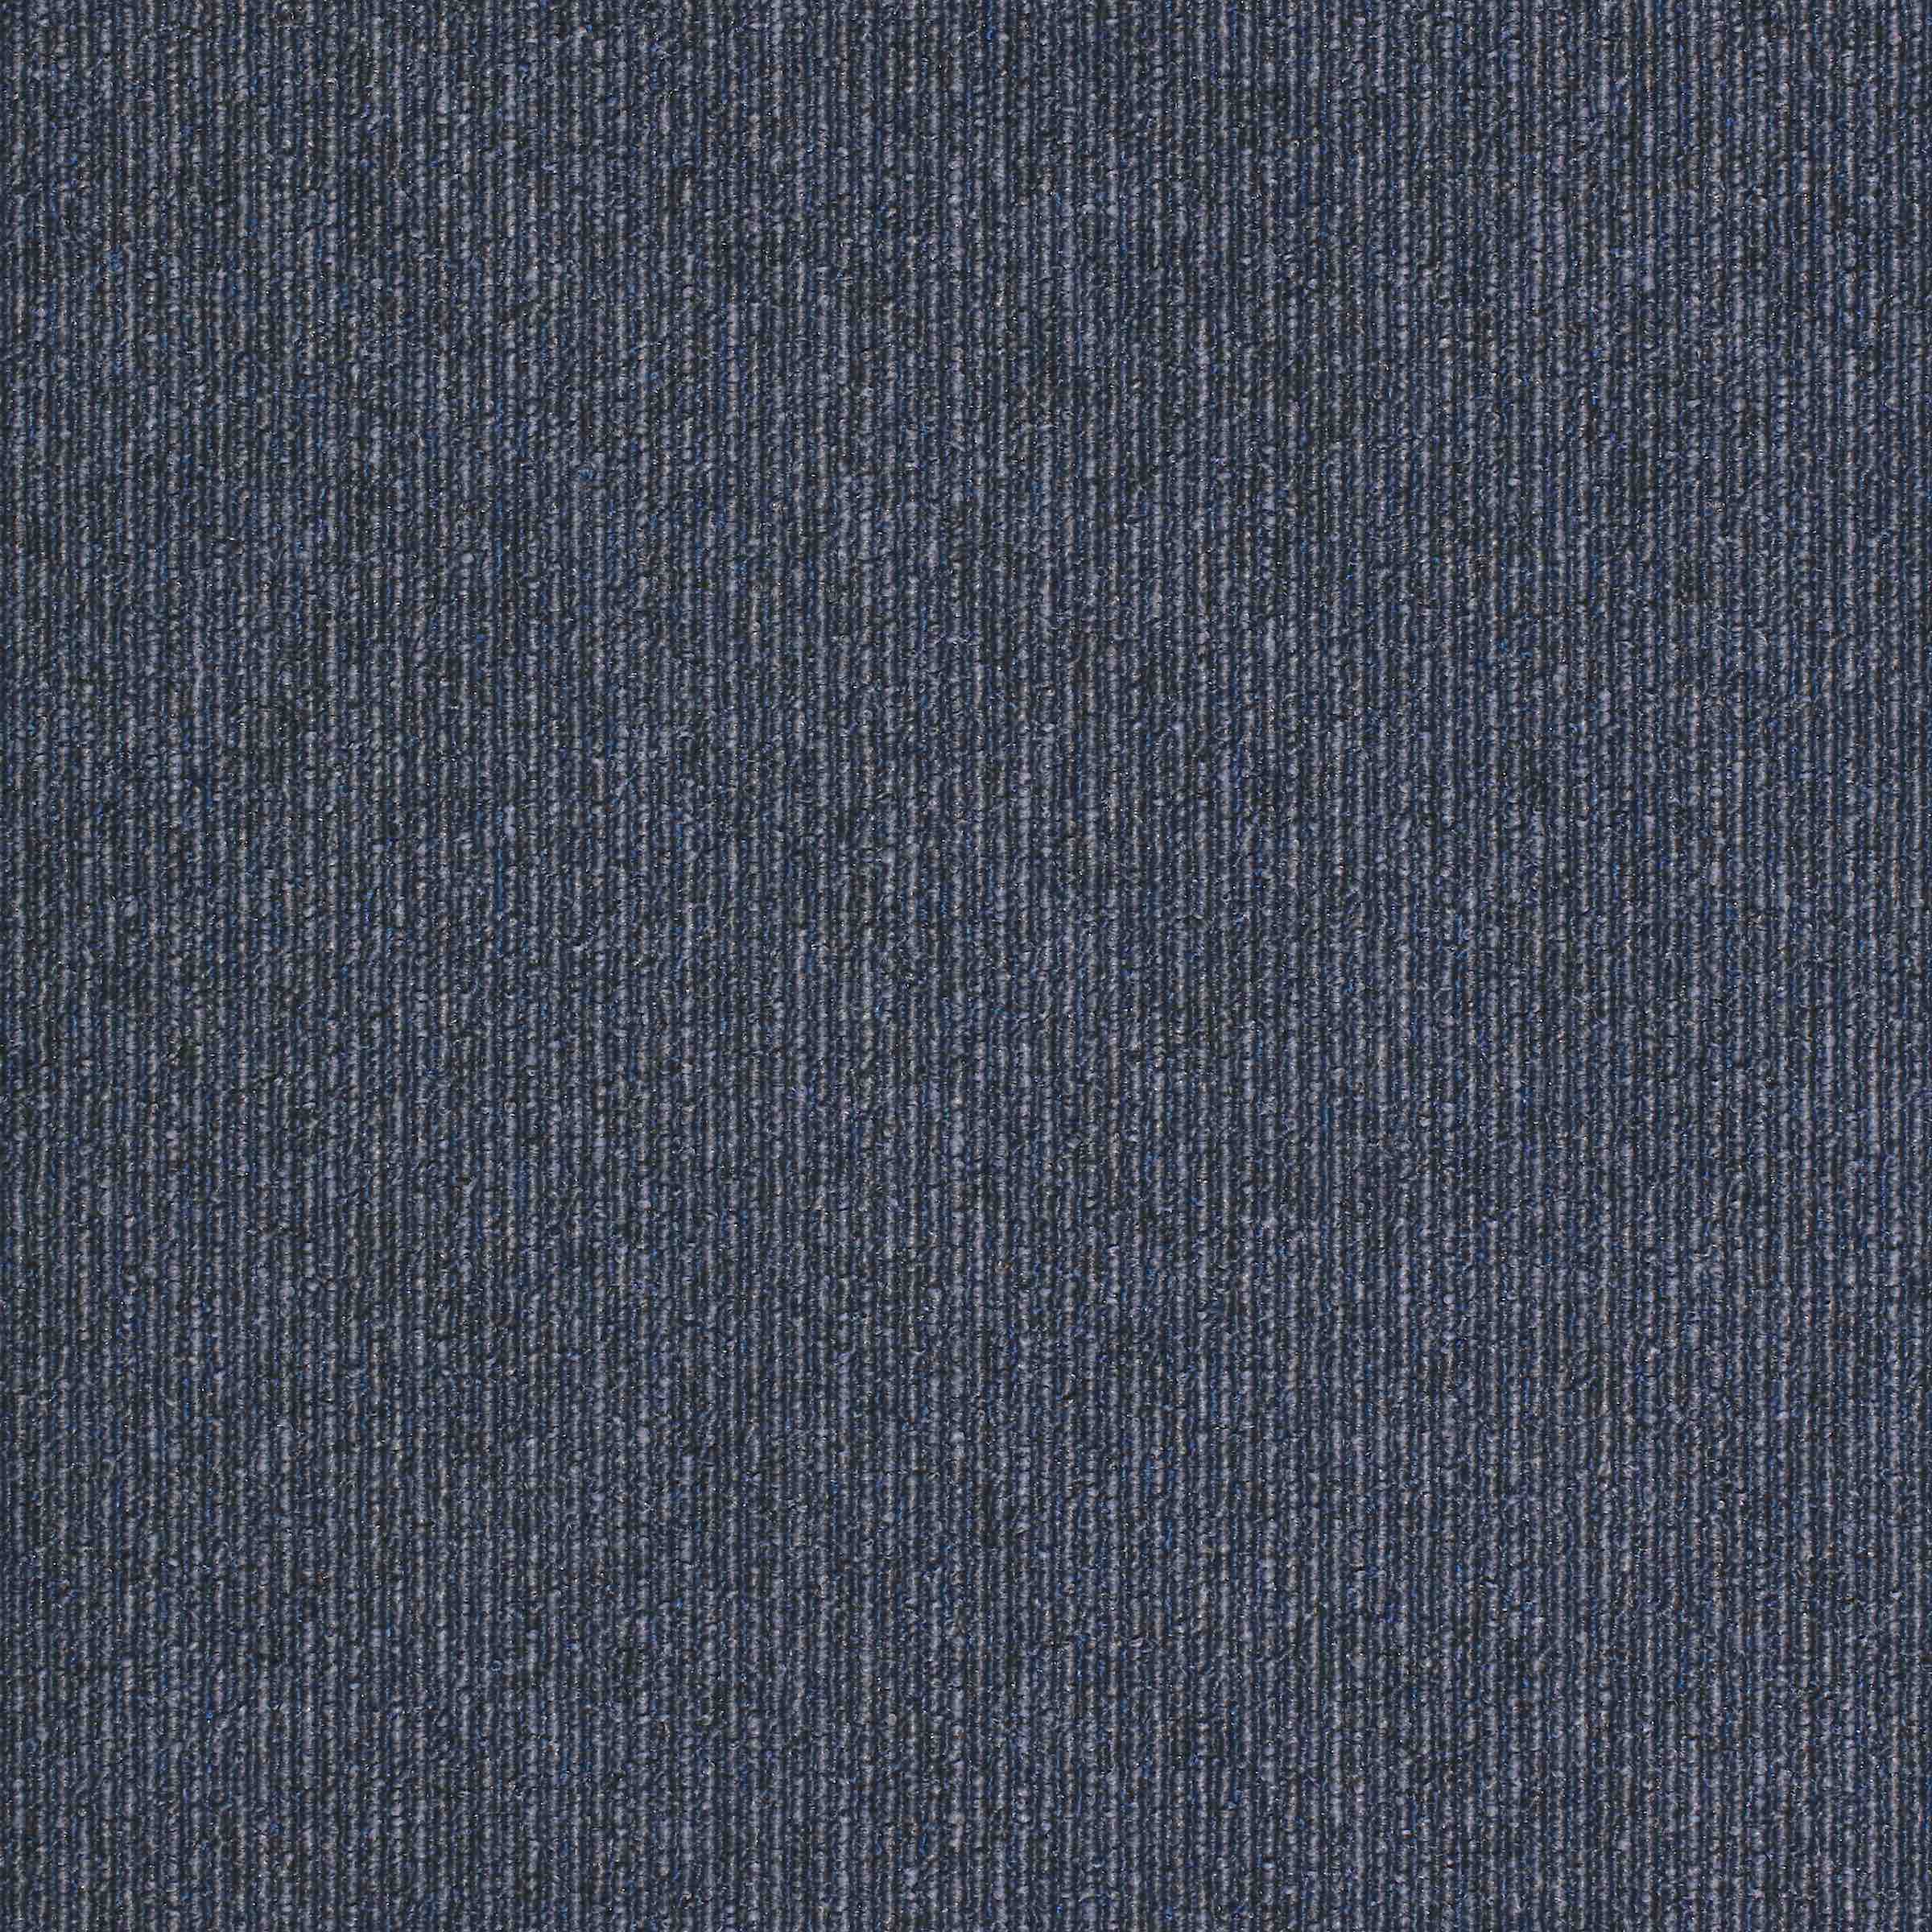 Paragon Macaw Stripe Carpet Tiles